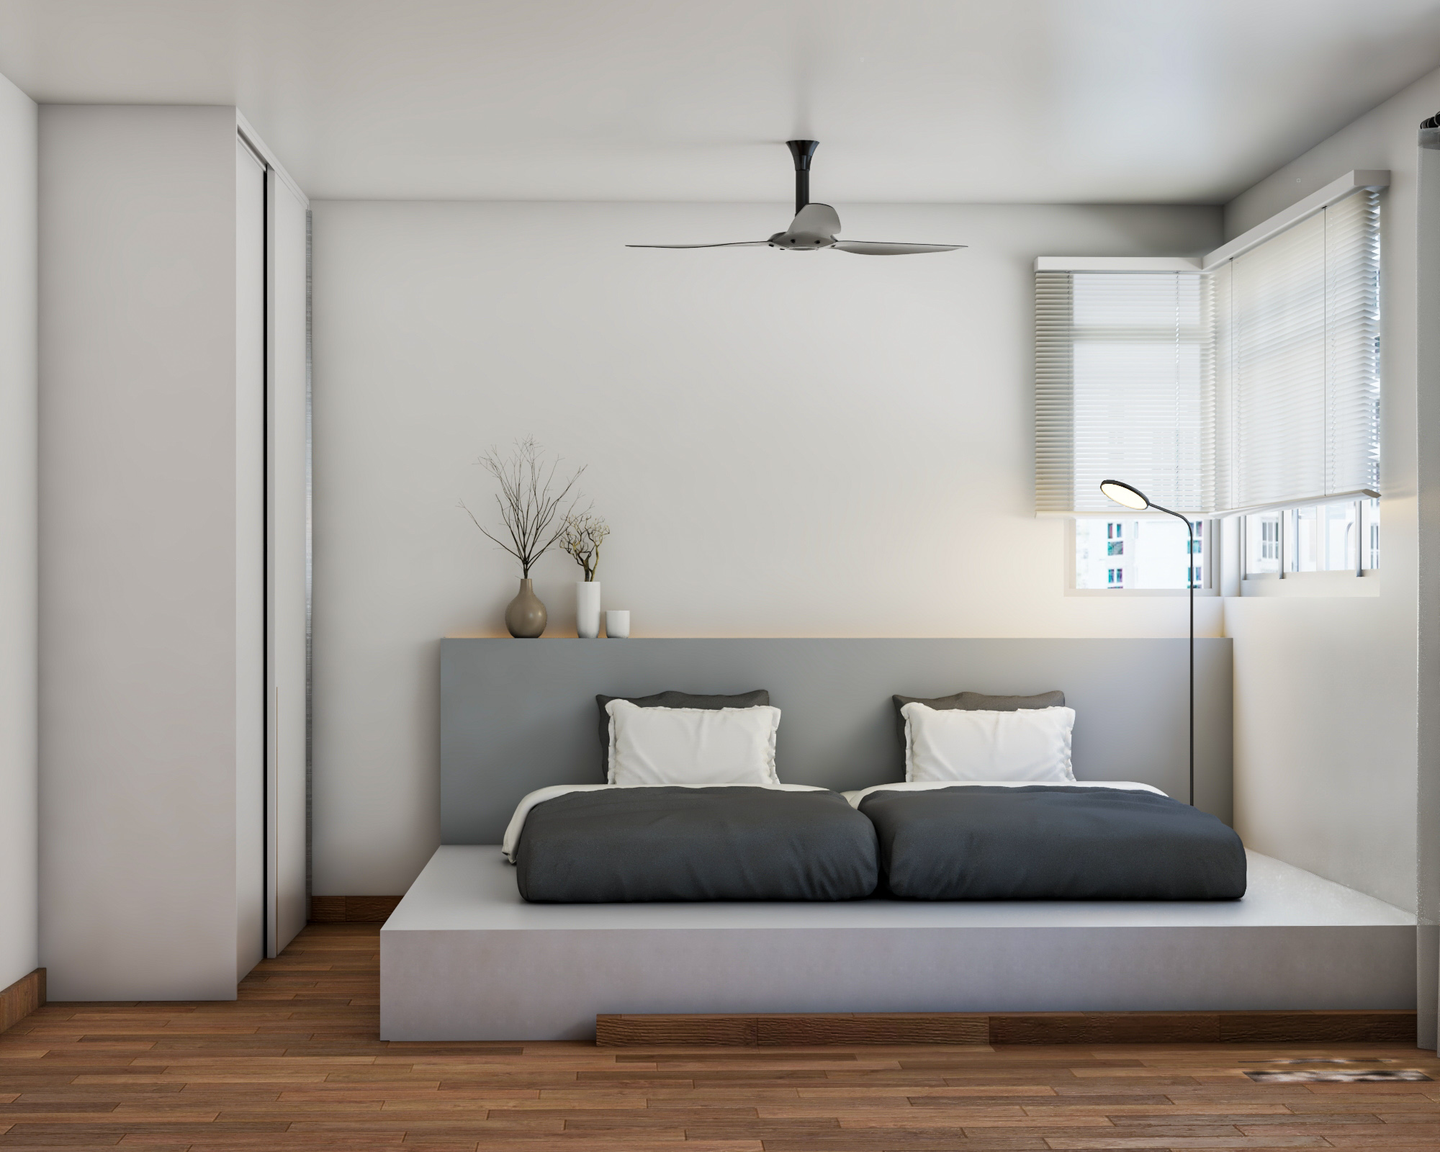 White Master Bedroom Interior Design with 2-Door Wardrobe - Livspace